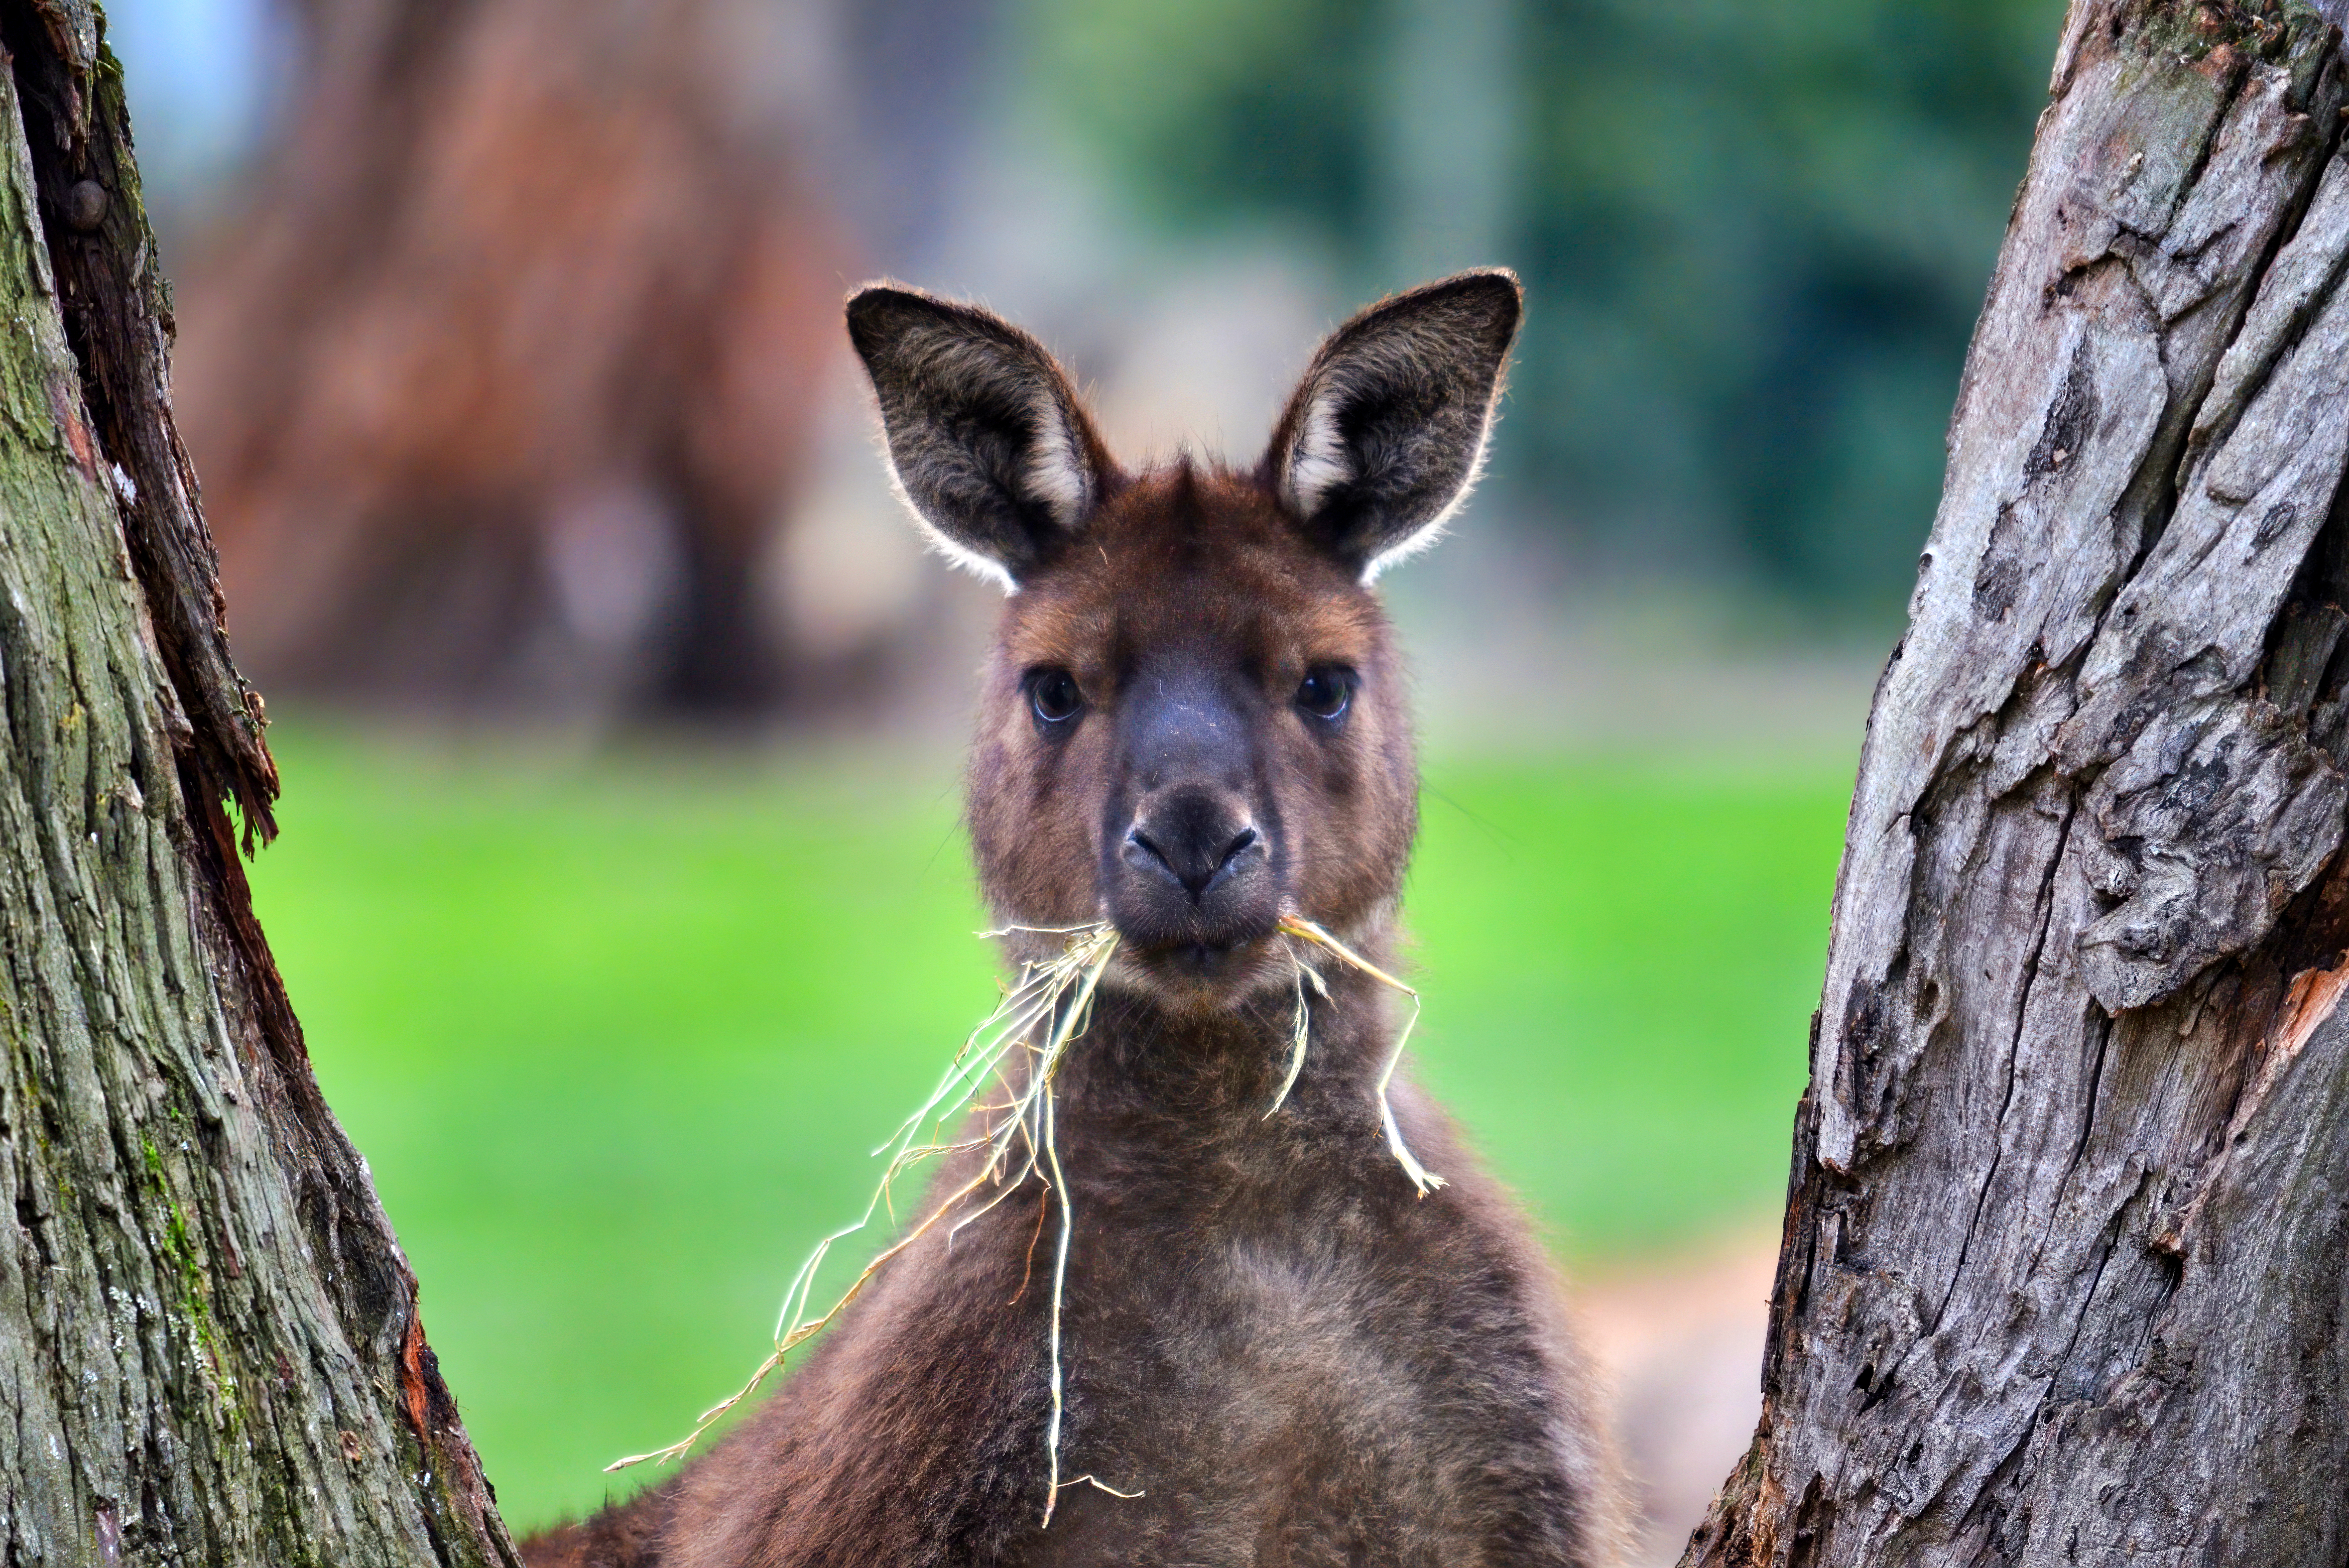 Kangaroo eating grass at Ballarat Wildlife Park